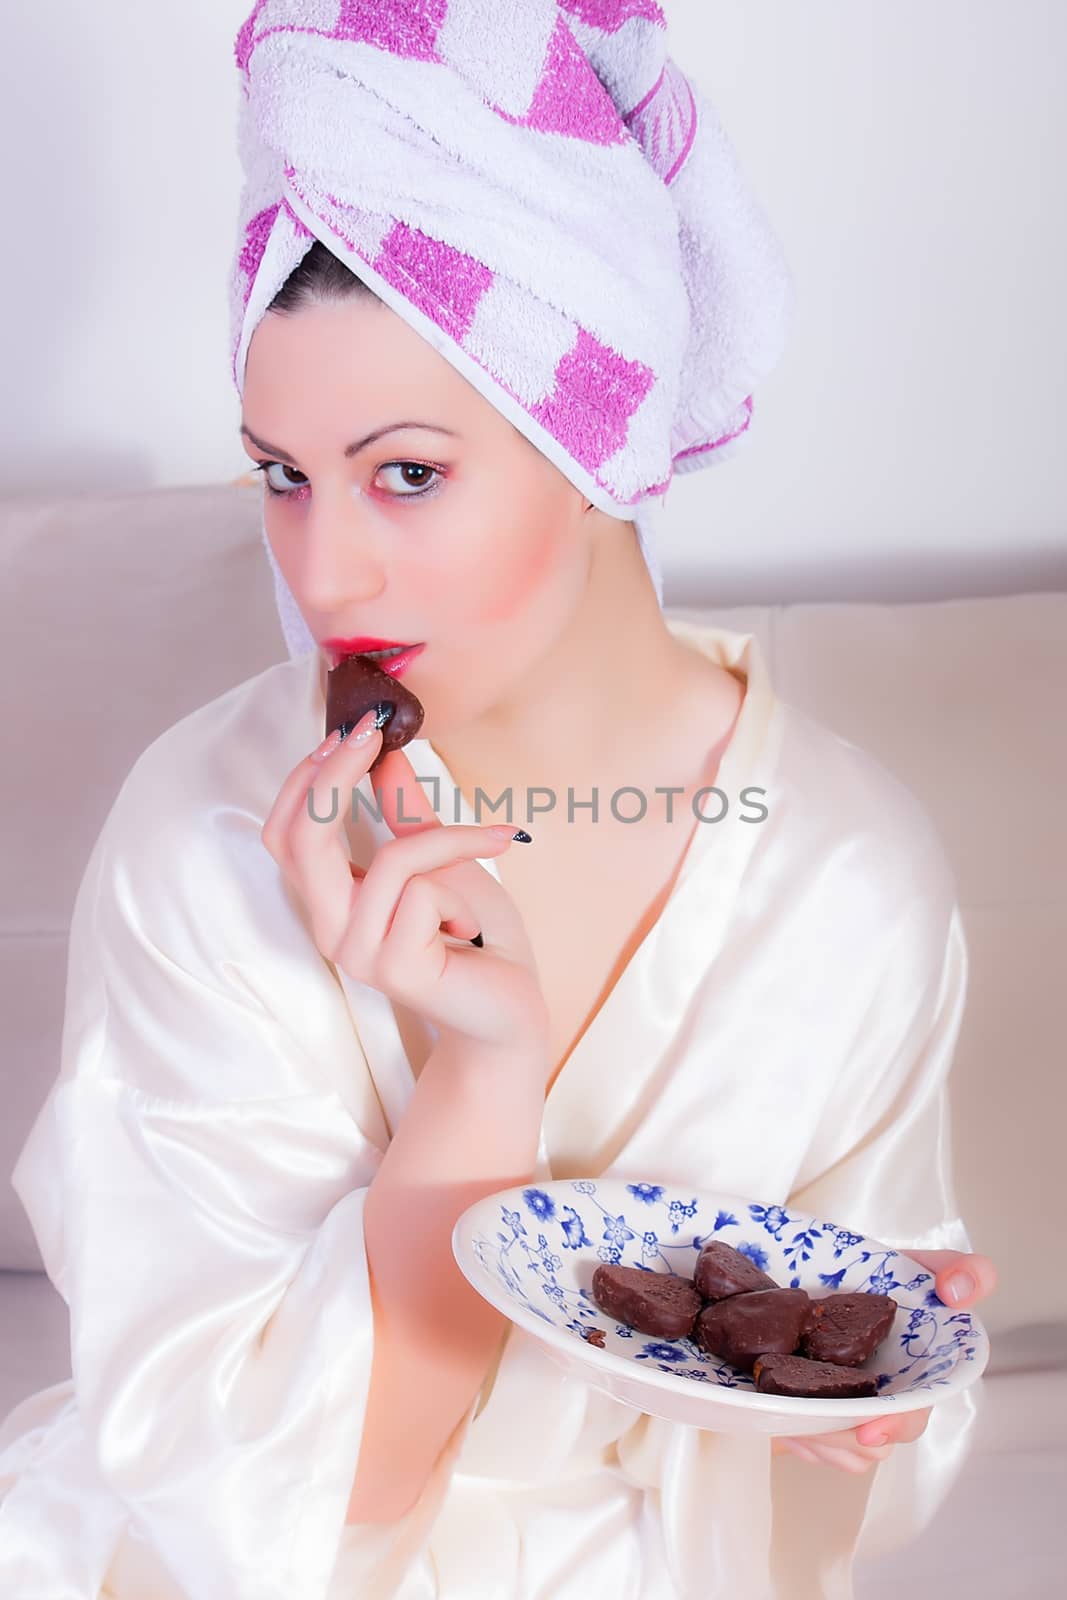 Beautiful girl is eating chocolate cookies by dukibu